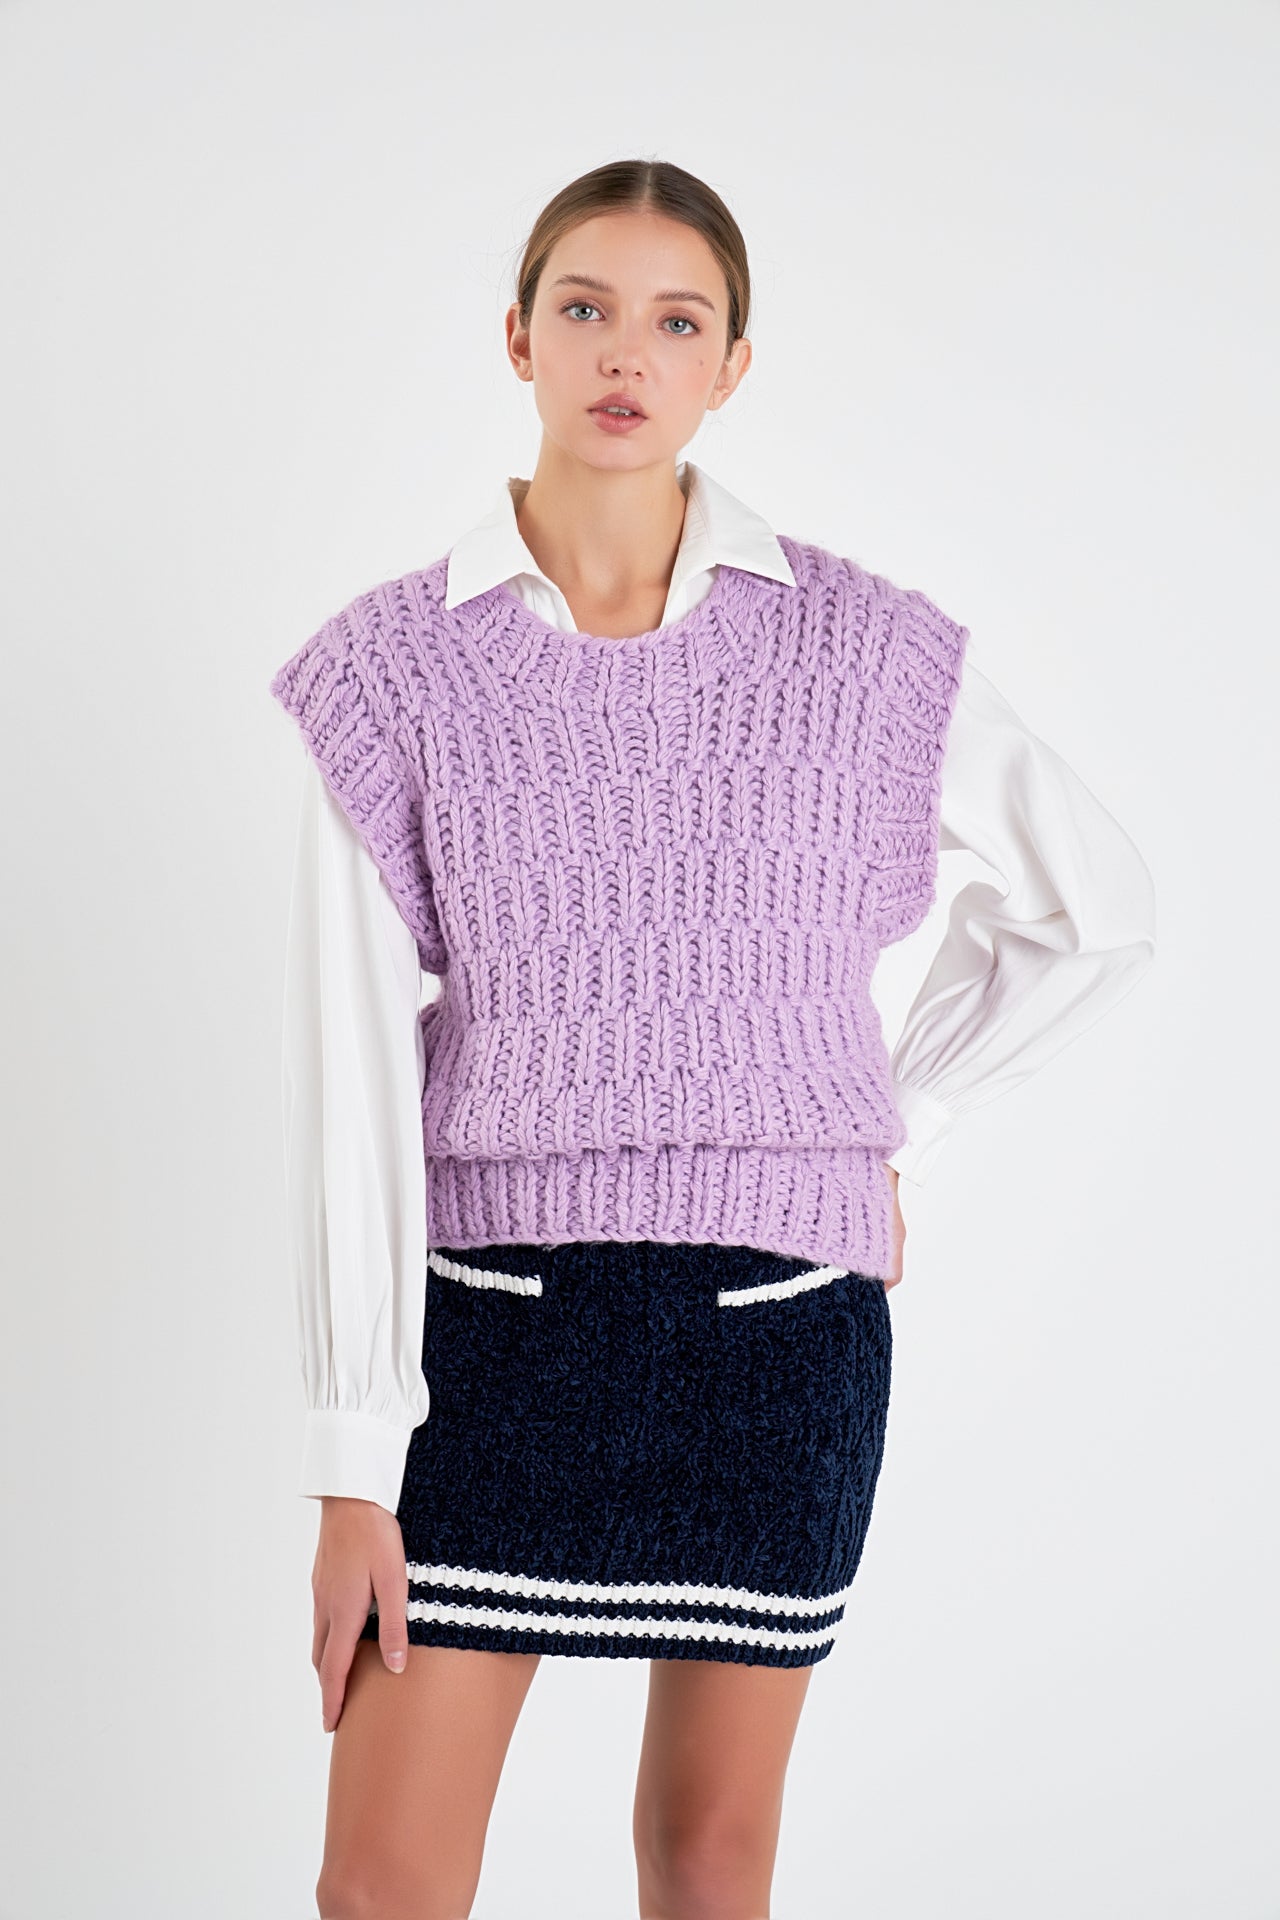 Sweaters & Knits - Women's Sweaters, Cardigans, & Knits – English